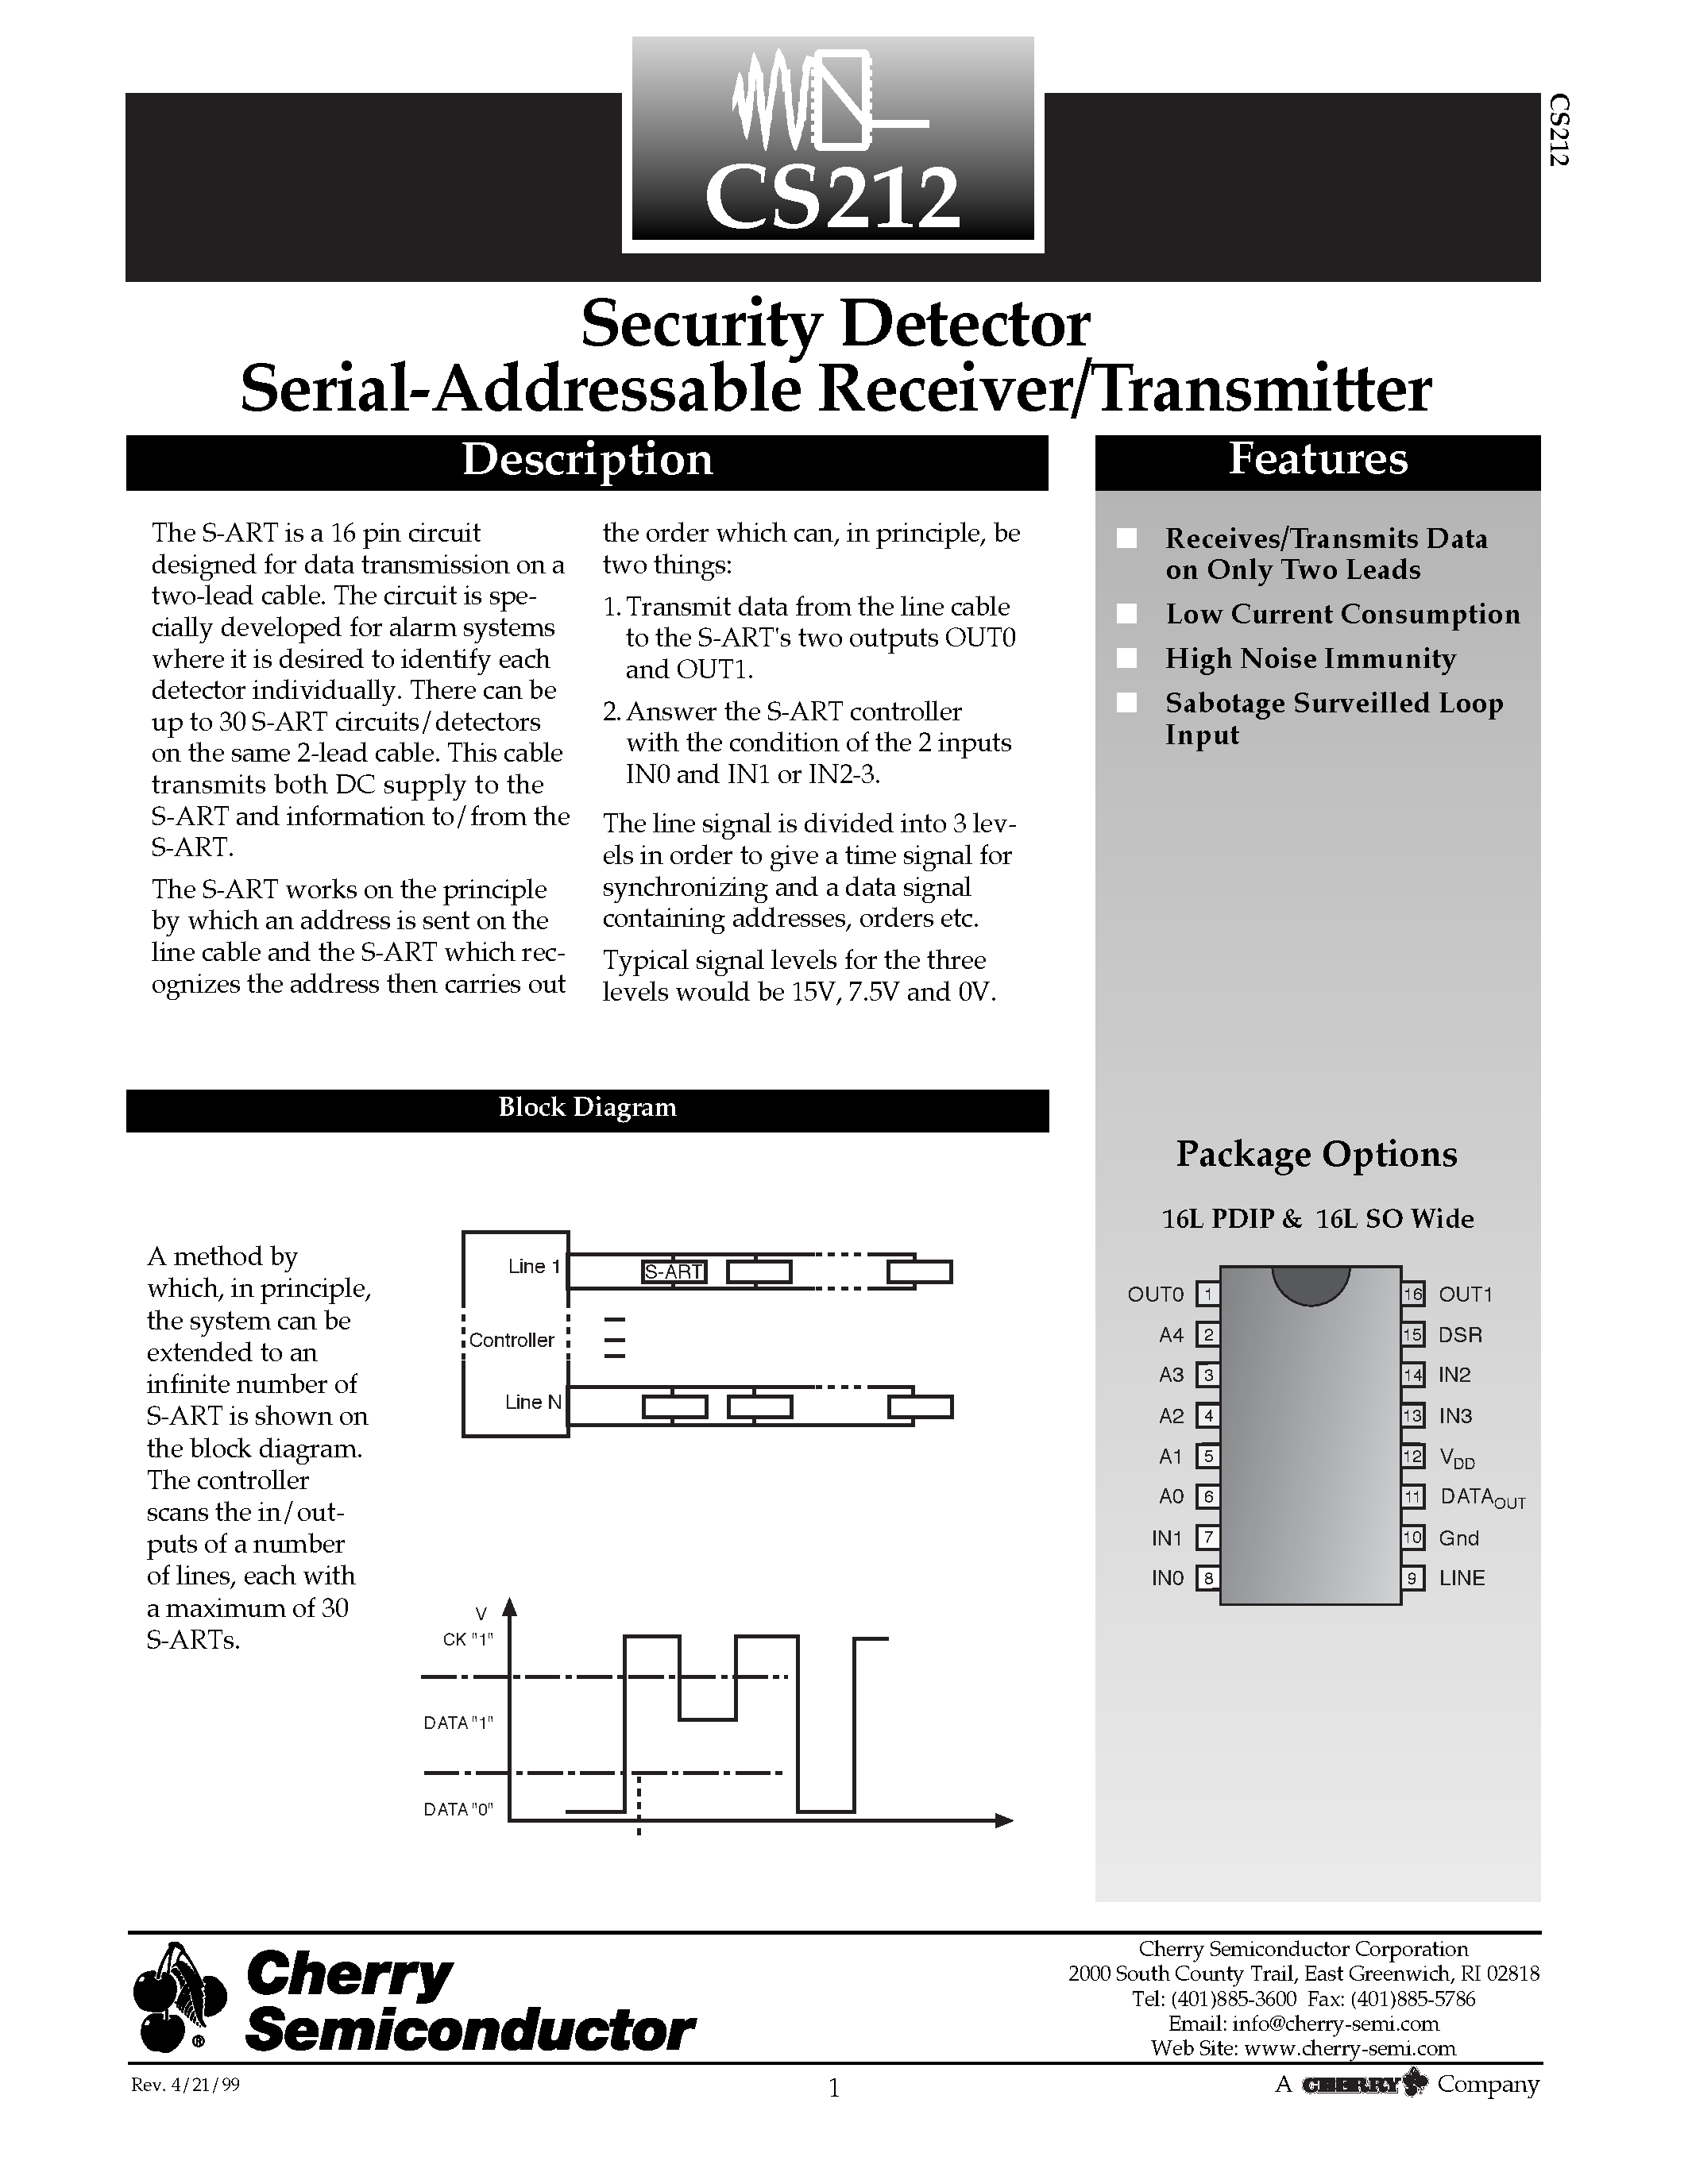 Datasheet CS212EN16 - Security Detector Serial-Addressable Receiver/Transmitter page 1